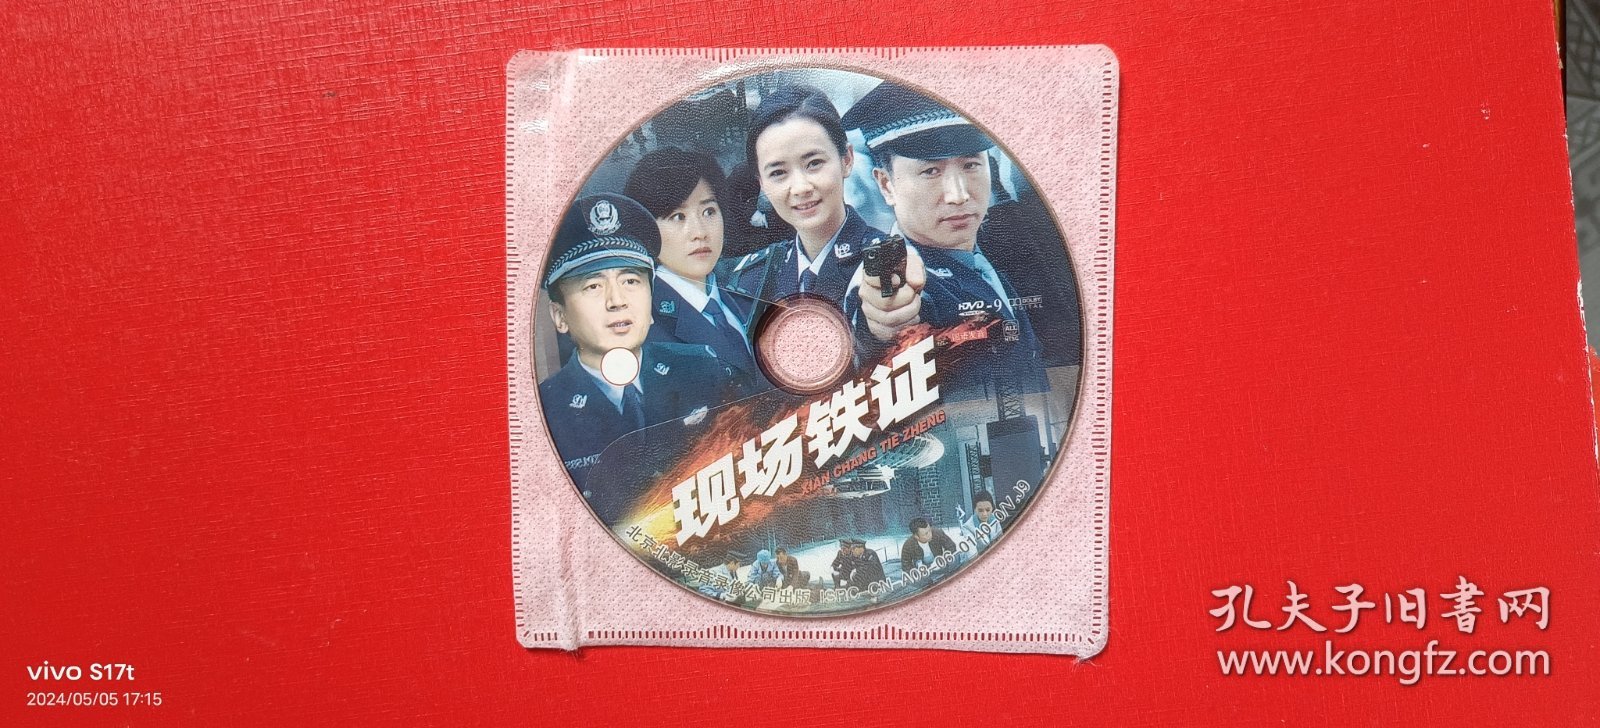 DVD-9 现场铁证